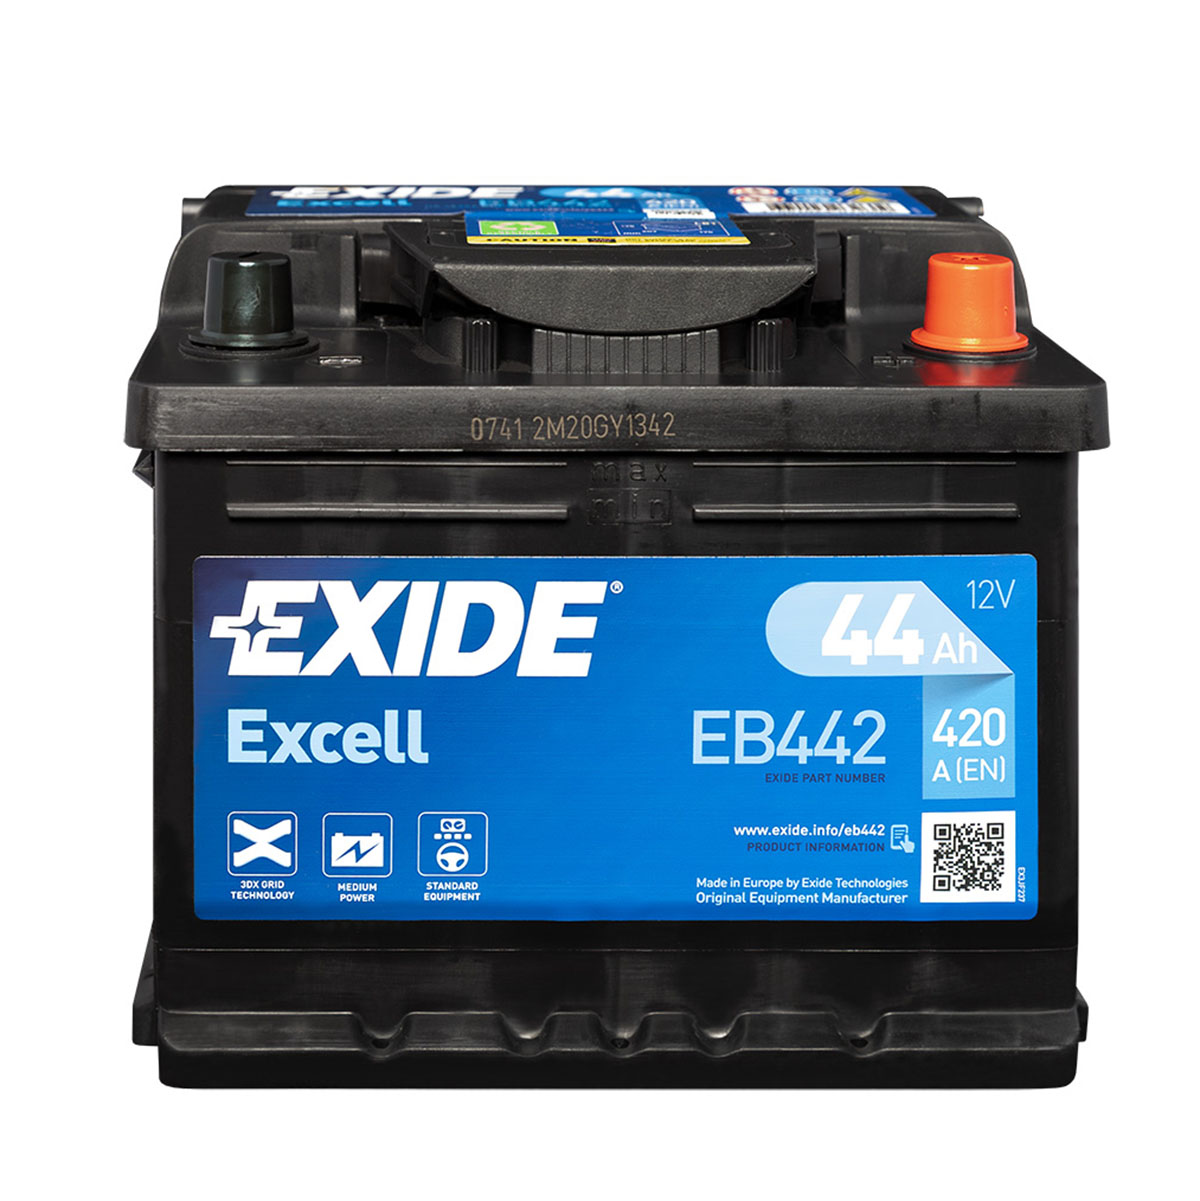 Exide Excell EB442 12V 44Ah Autobatterie, Autobatterien, Starterbatterien, Fahrzeugbatterien